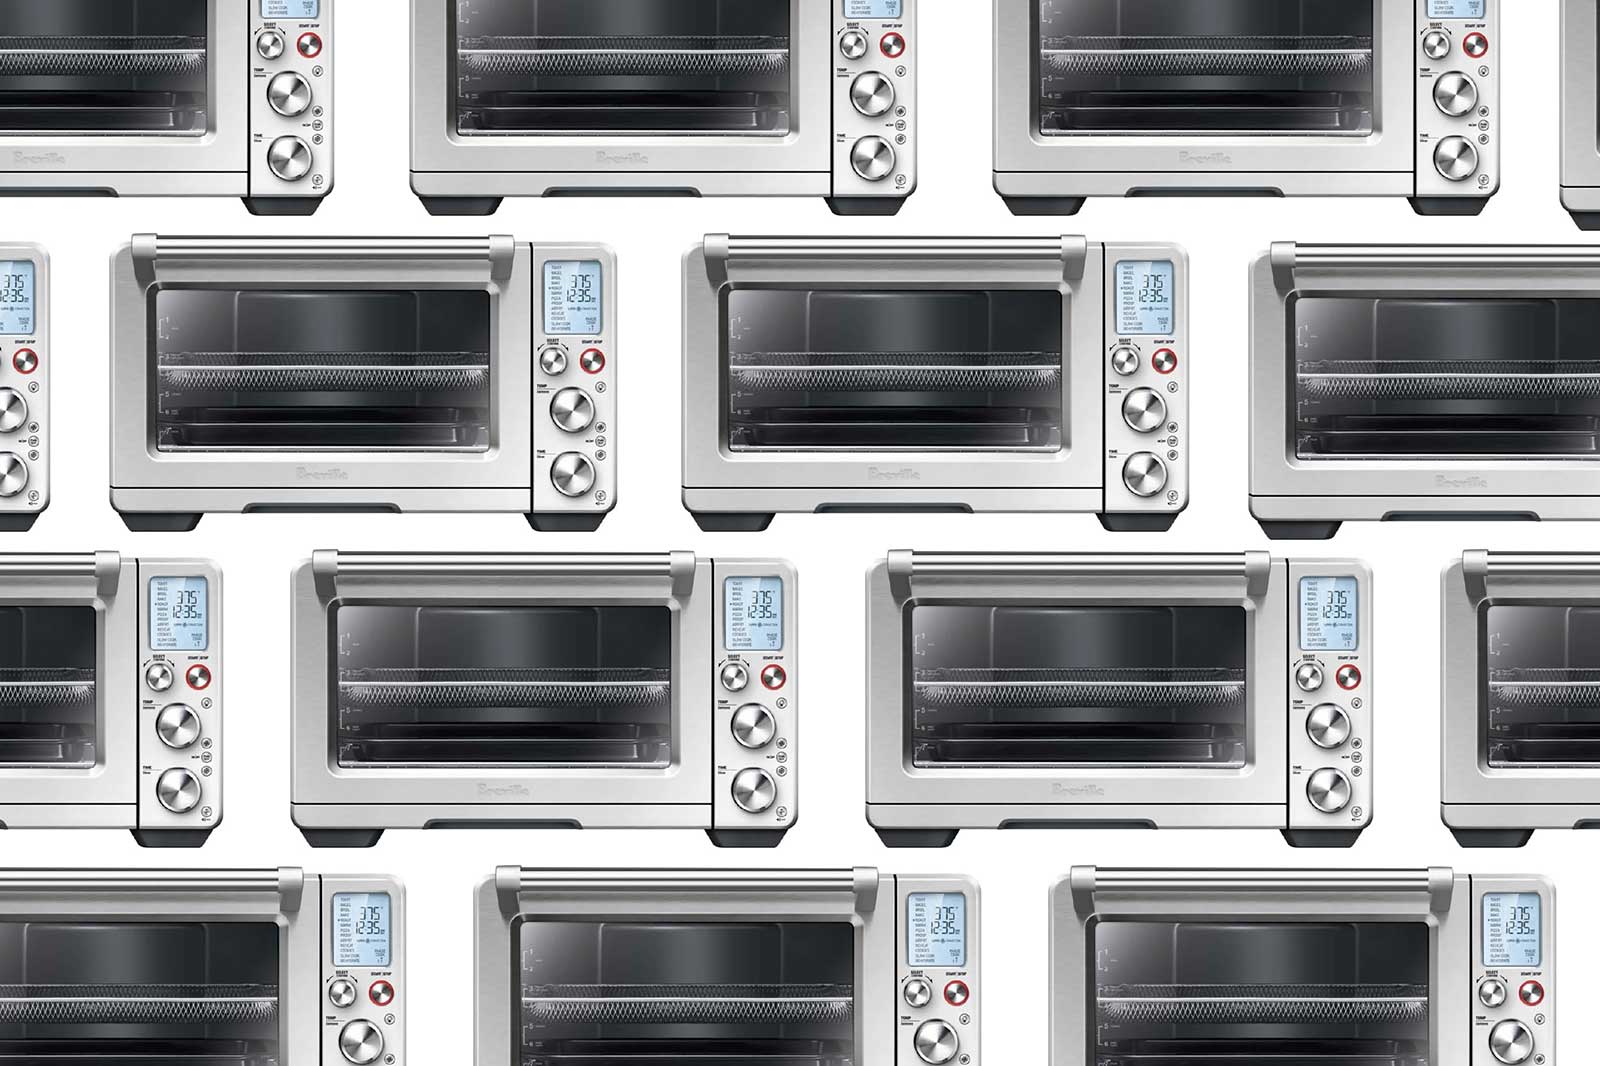 https://www.popsci.com/uploads/2023/11/15/early-black-friday-smart-oven-deal.jpg?auto=webp&width=1440&height=959.4